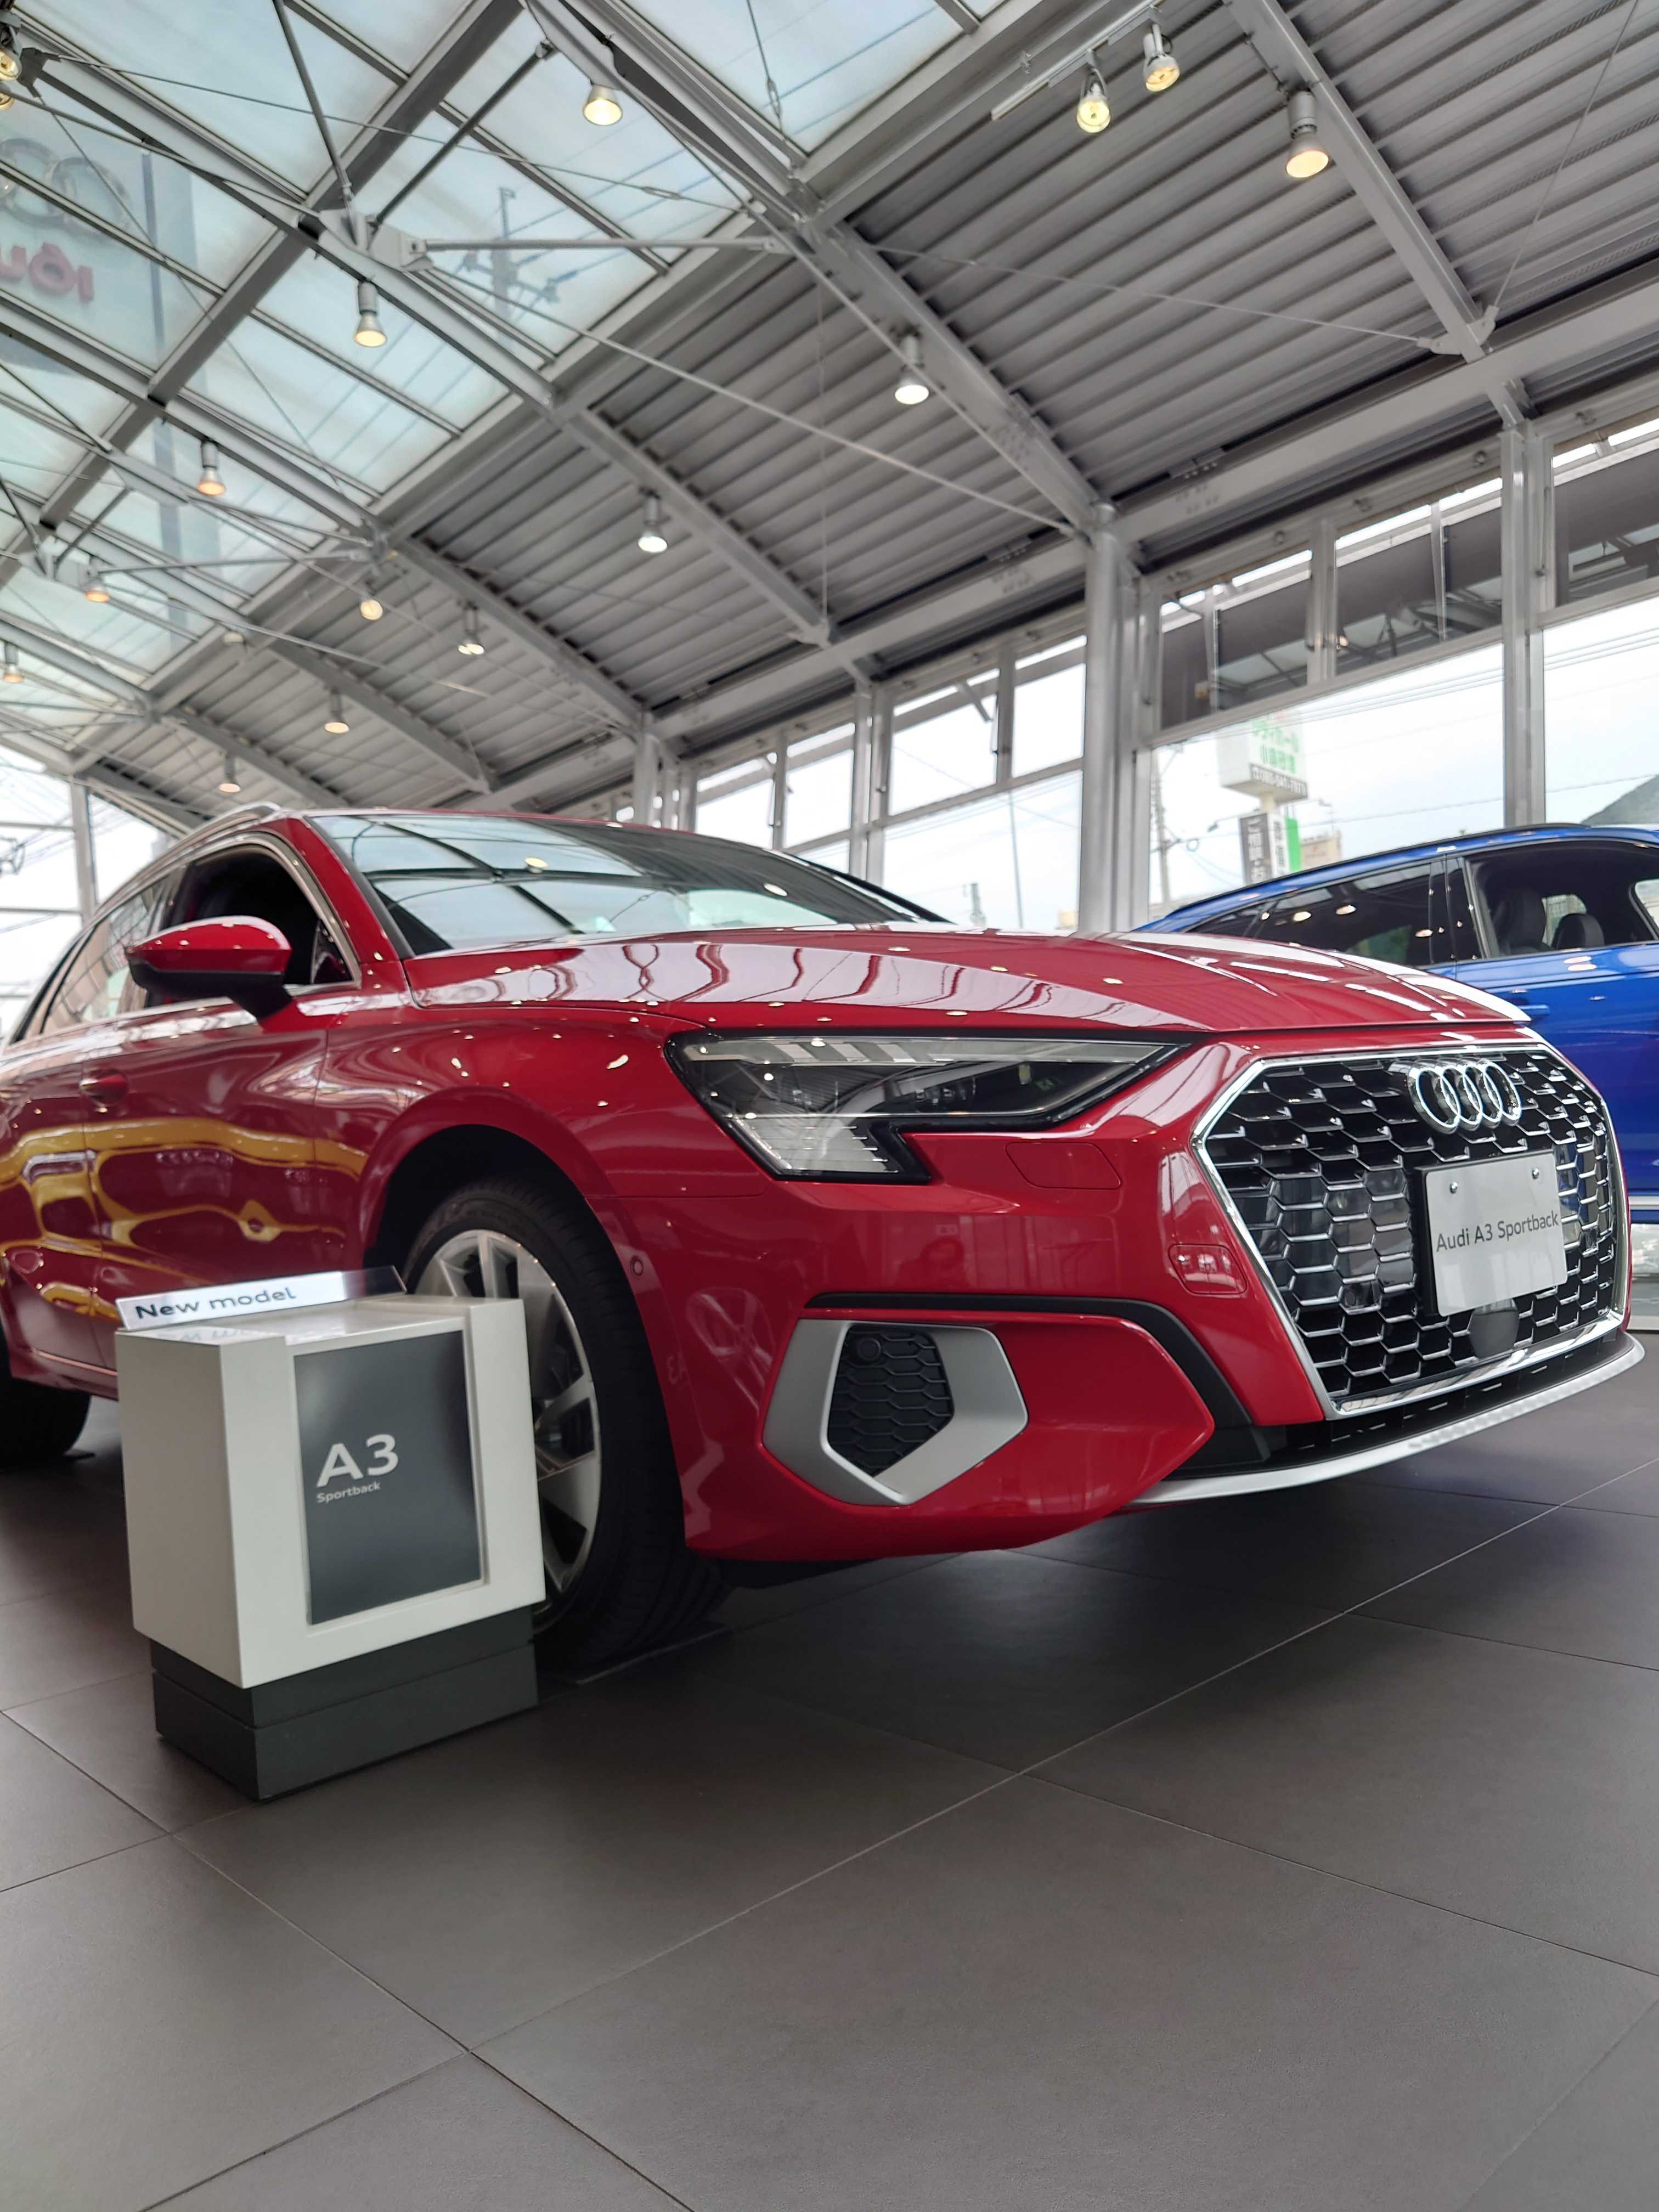 Baan Afhankelijk Sociaal NEW Audi A3 Sportback | みりうノオト - 楽天ブログ